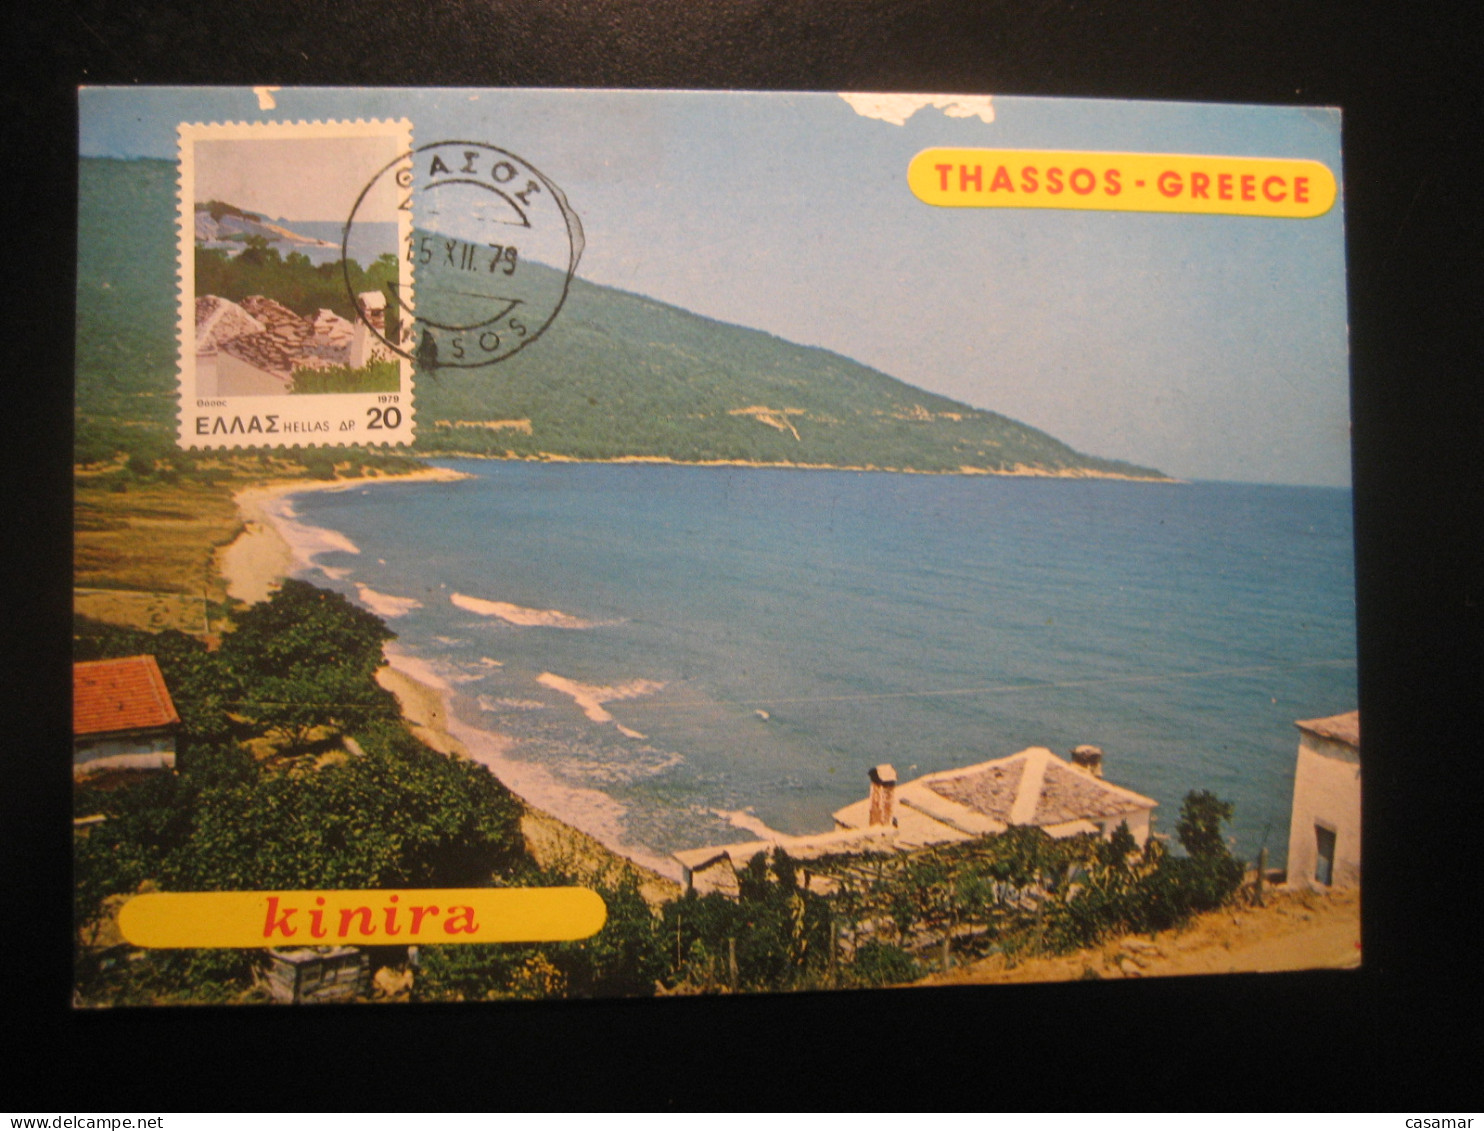 THASSOS Island 1979 Kinira Maxi Maximum Card GREECE - Covers & Documents